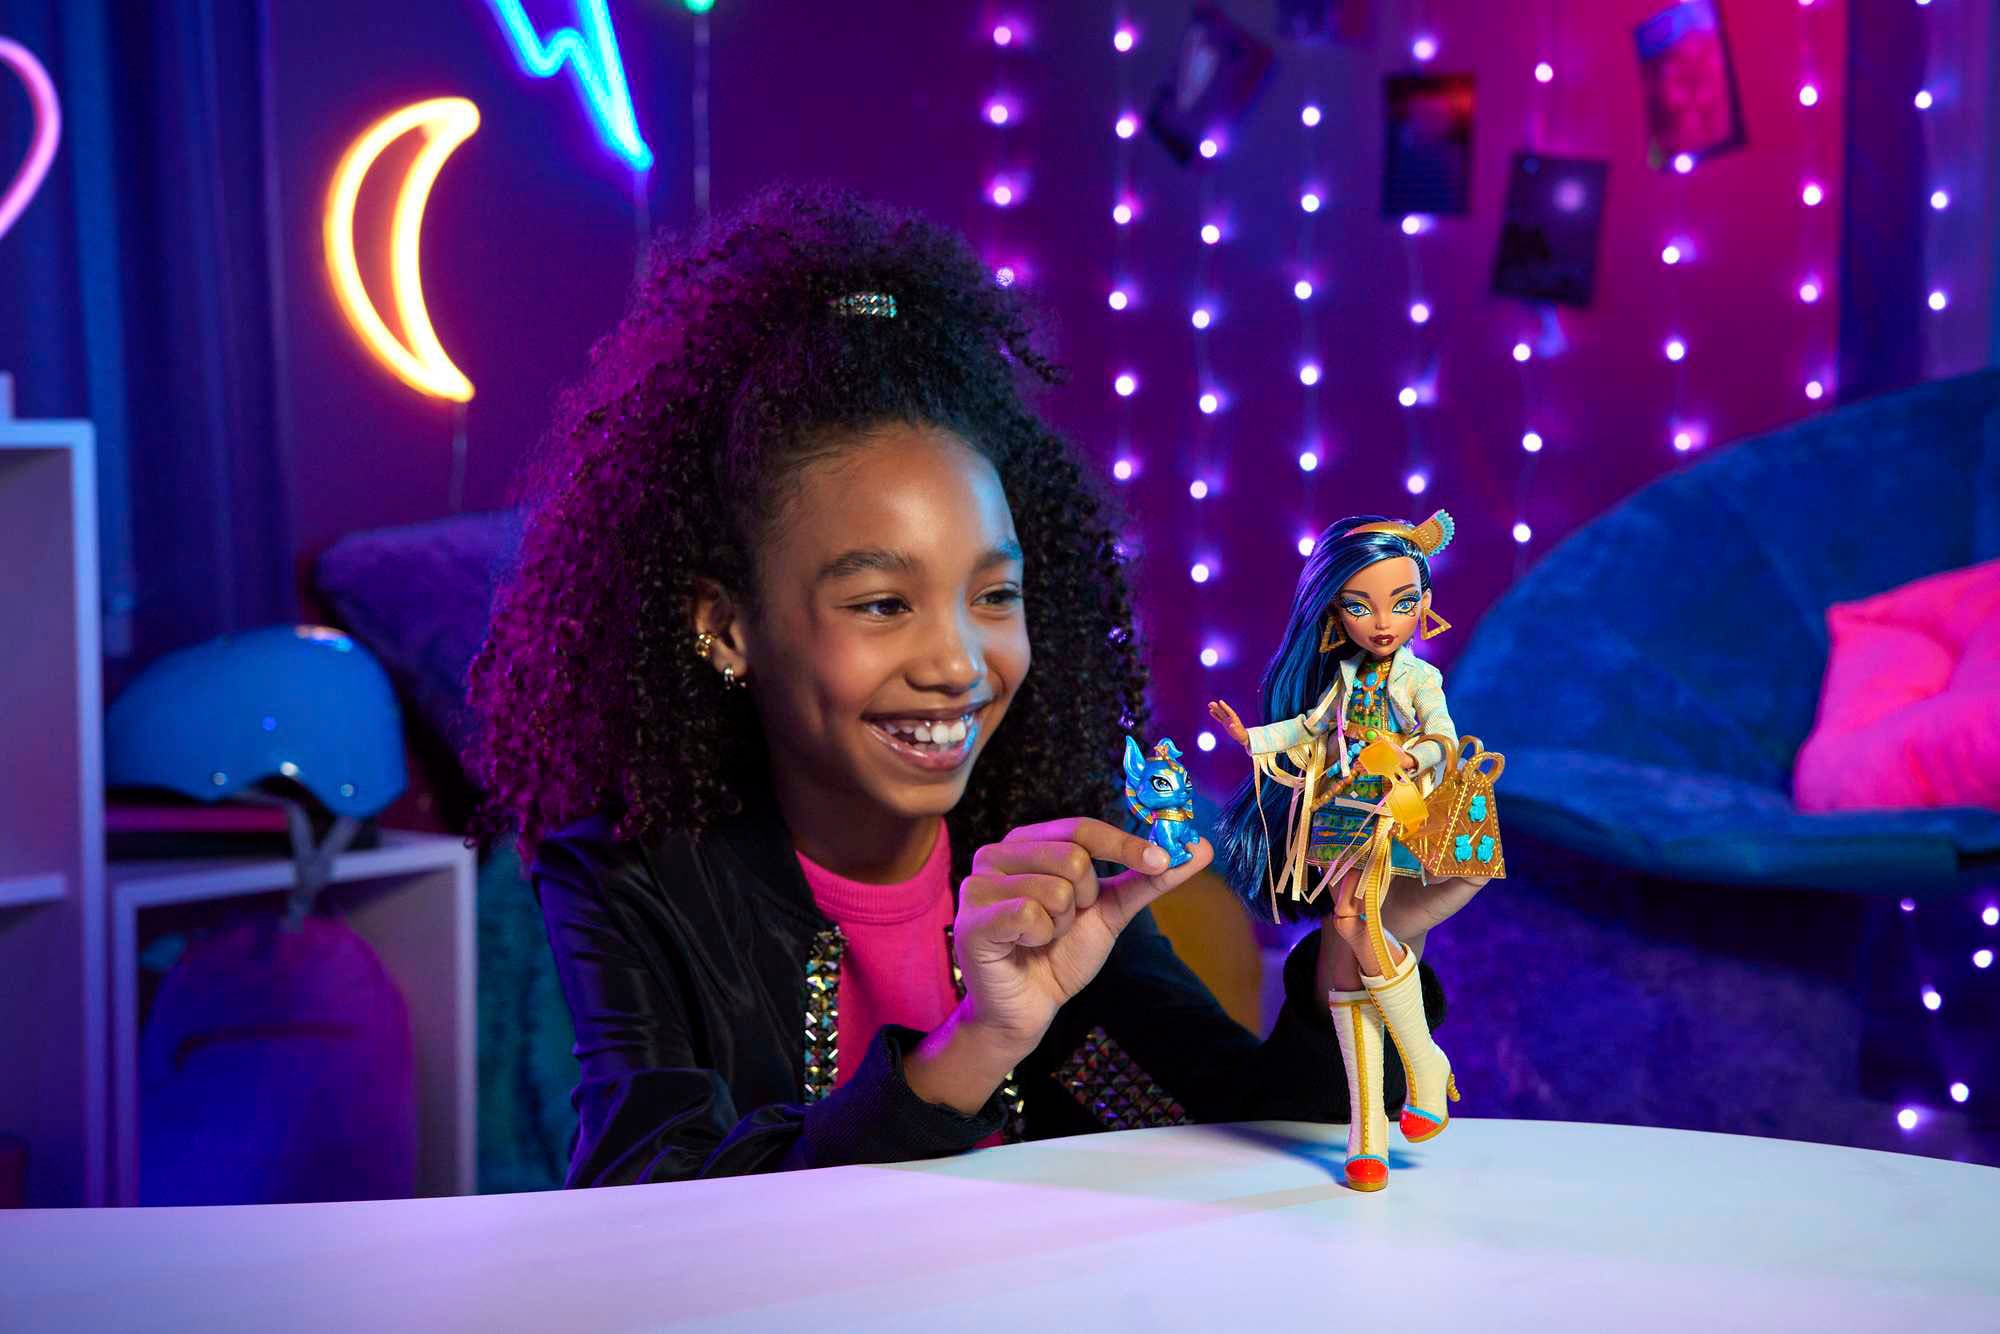 Mattel® Anziehpuppe »Monster High, Cleo de Nile mit Hund«